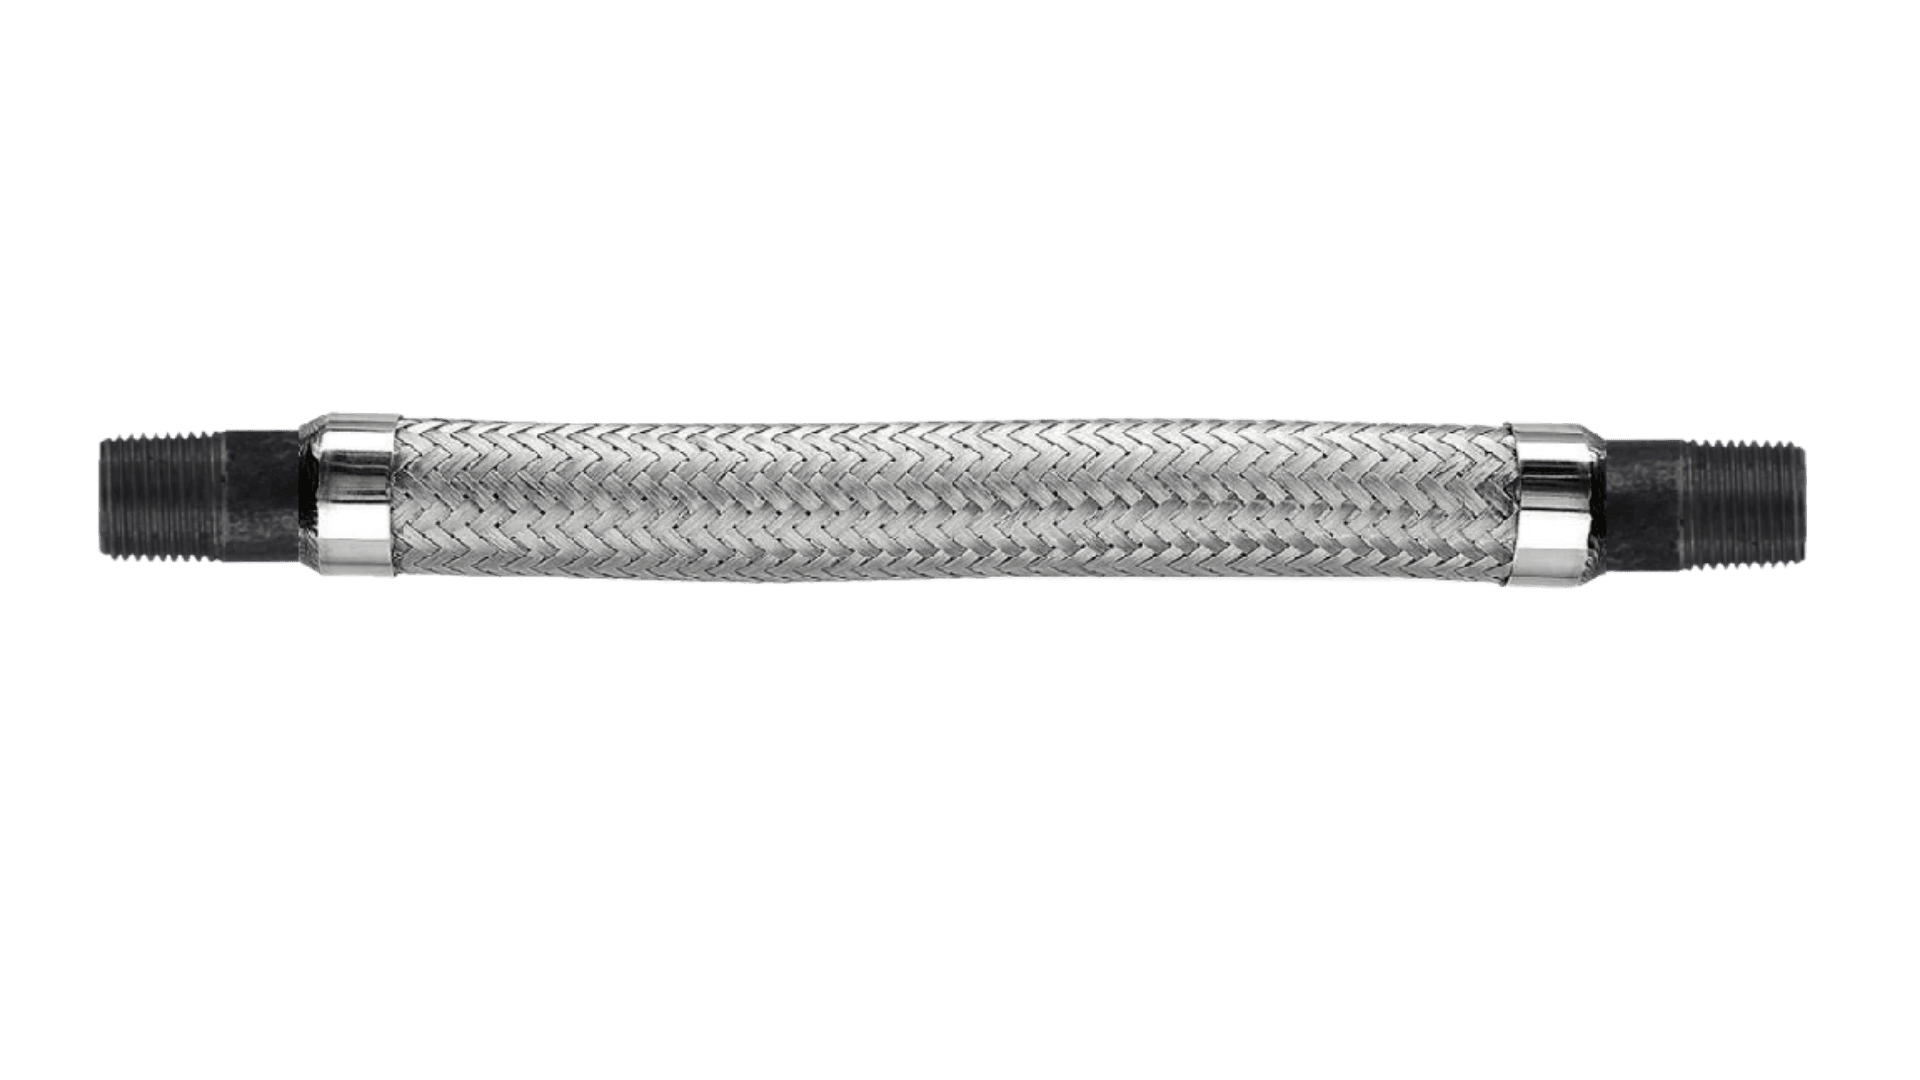 Single Braided Compressed Air Line Metal Flex Hose with CS sch.40 Male NPT Each End - Flex Pipe USA